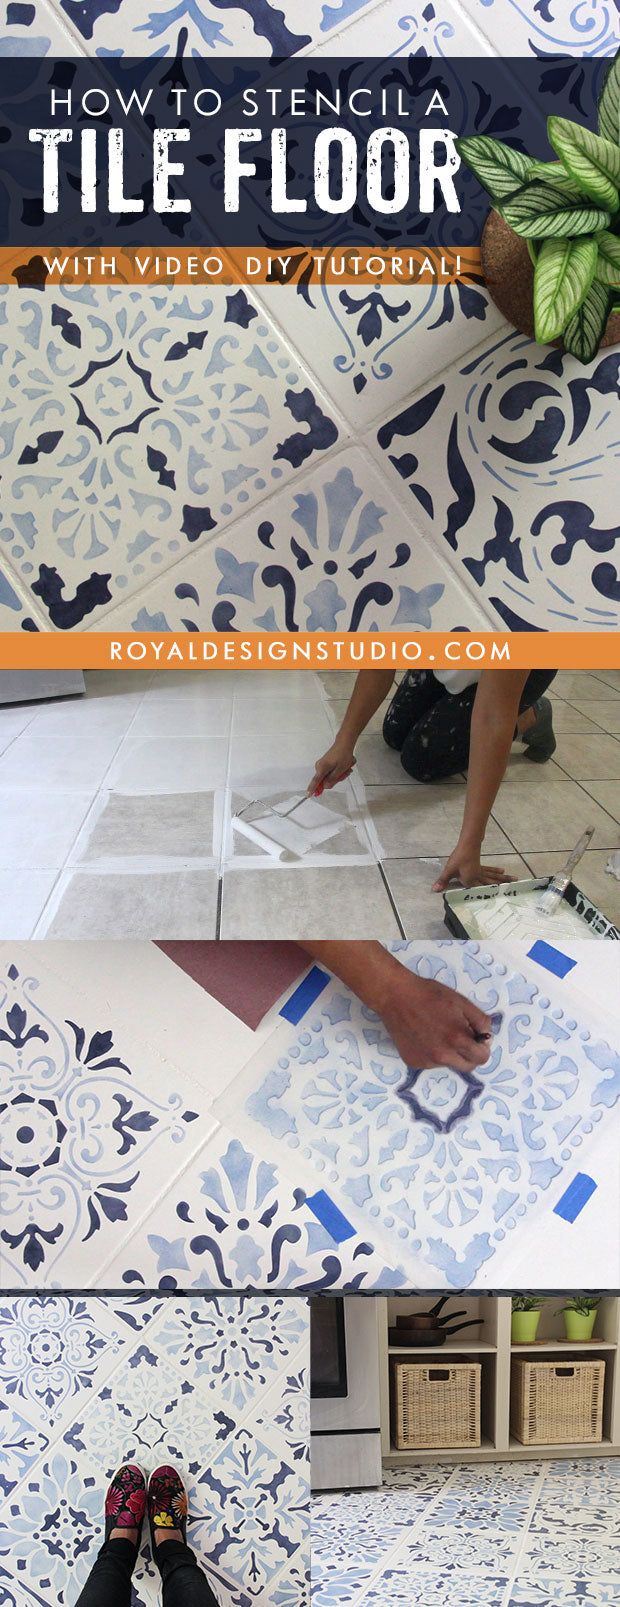 Decorative Kitchen Towels  Paper Mosaic Studio - Christmas Folk